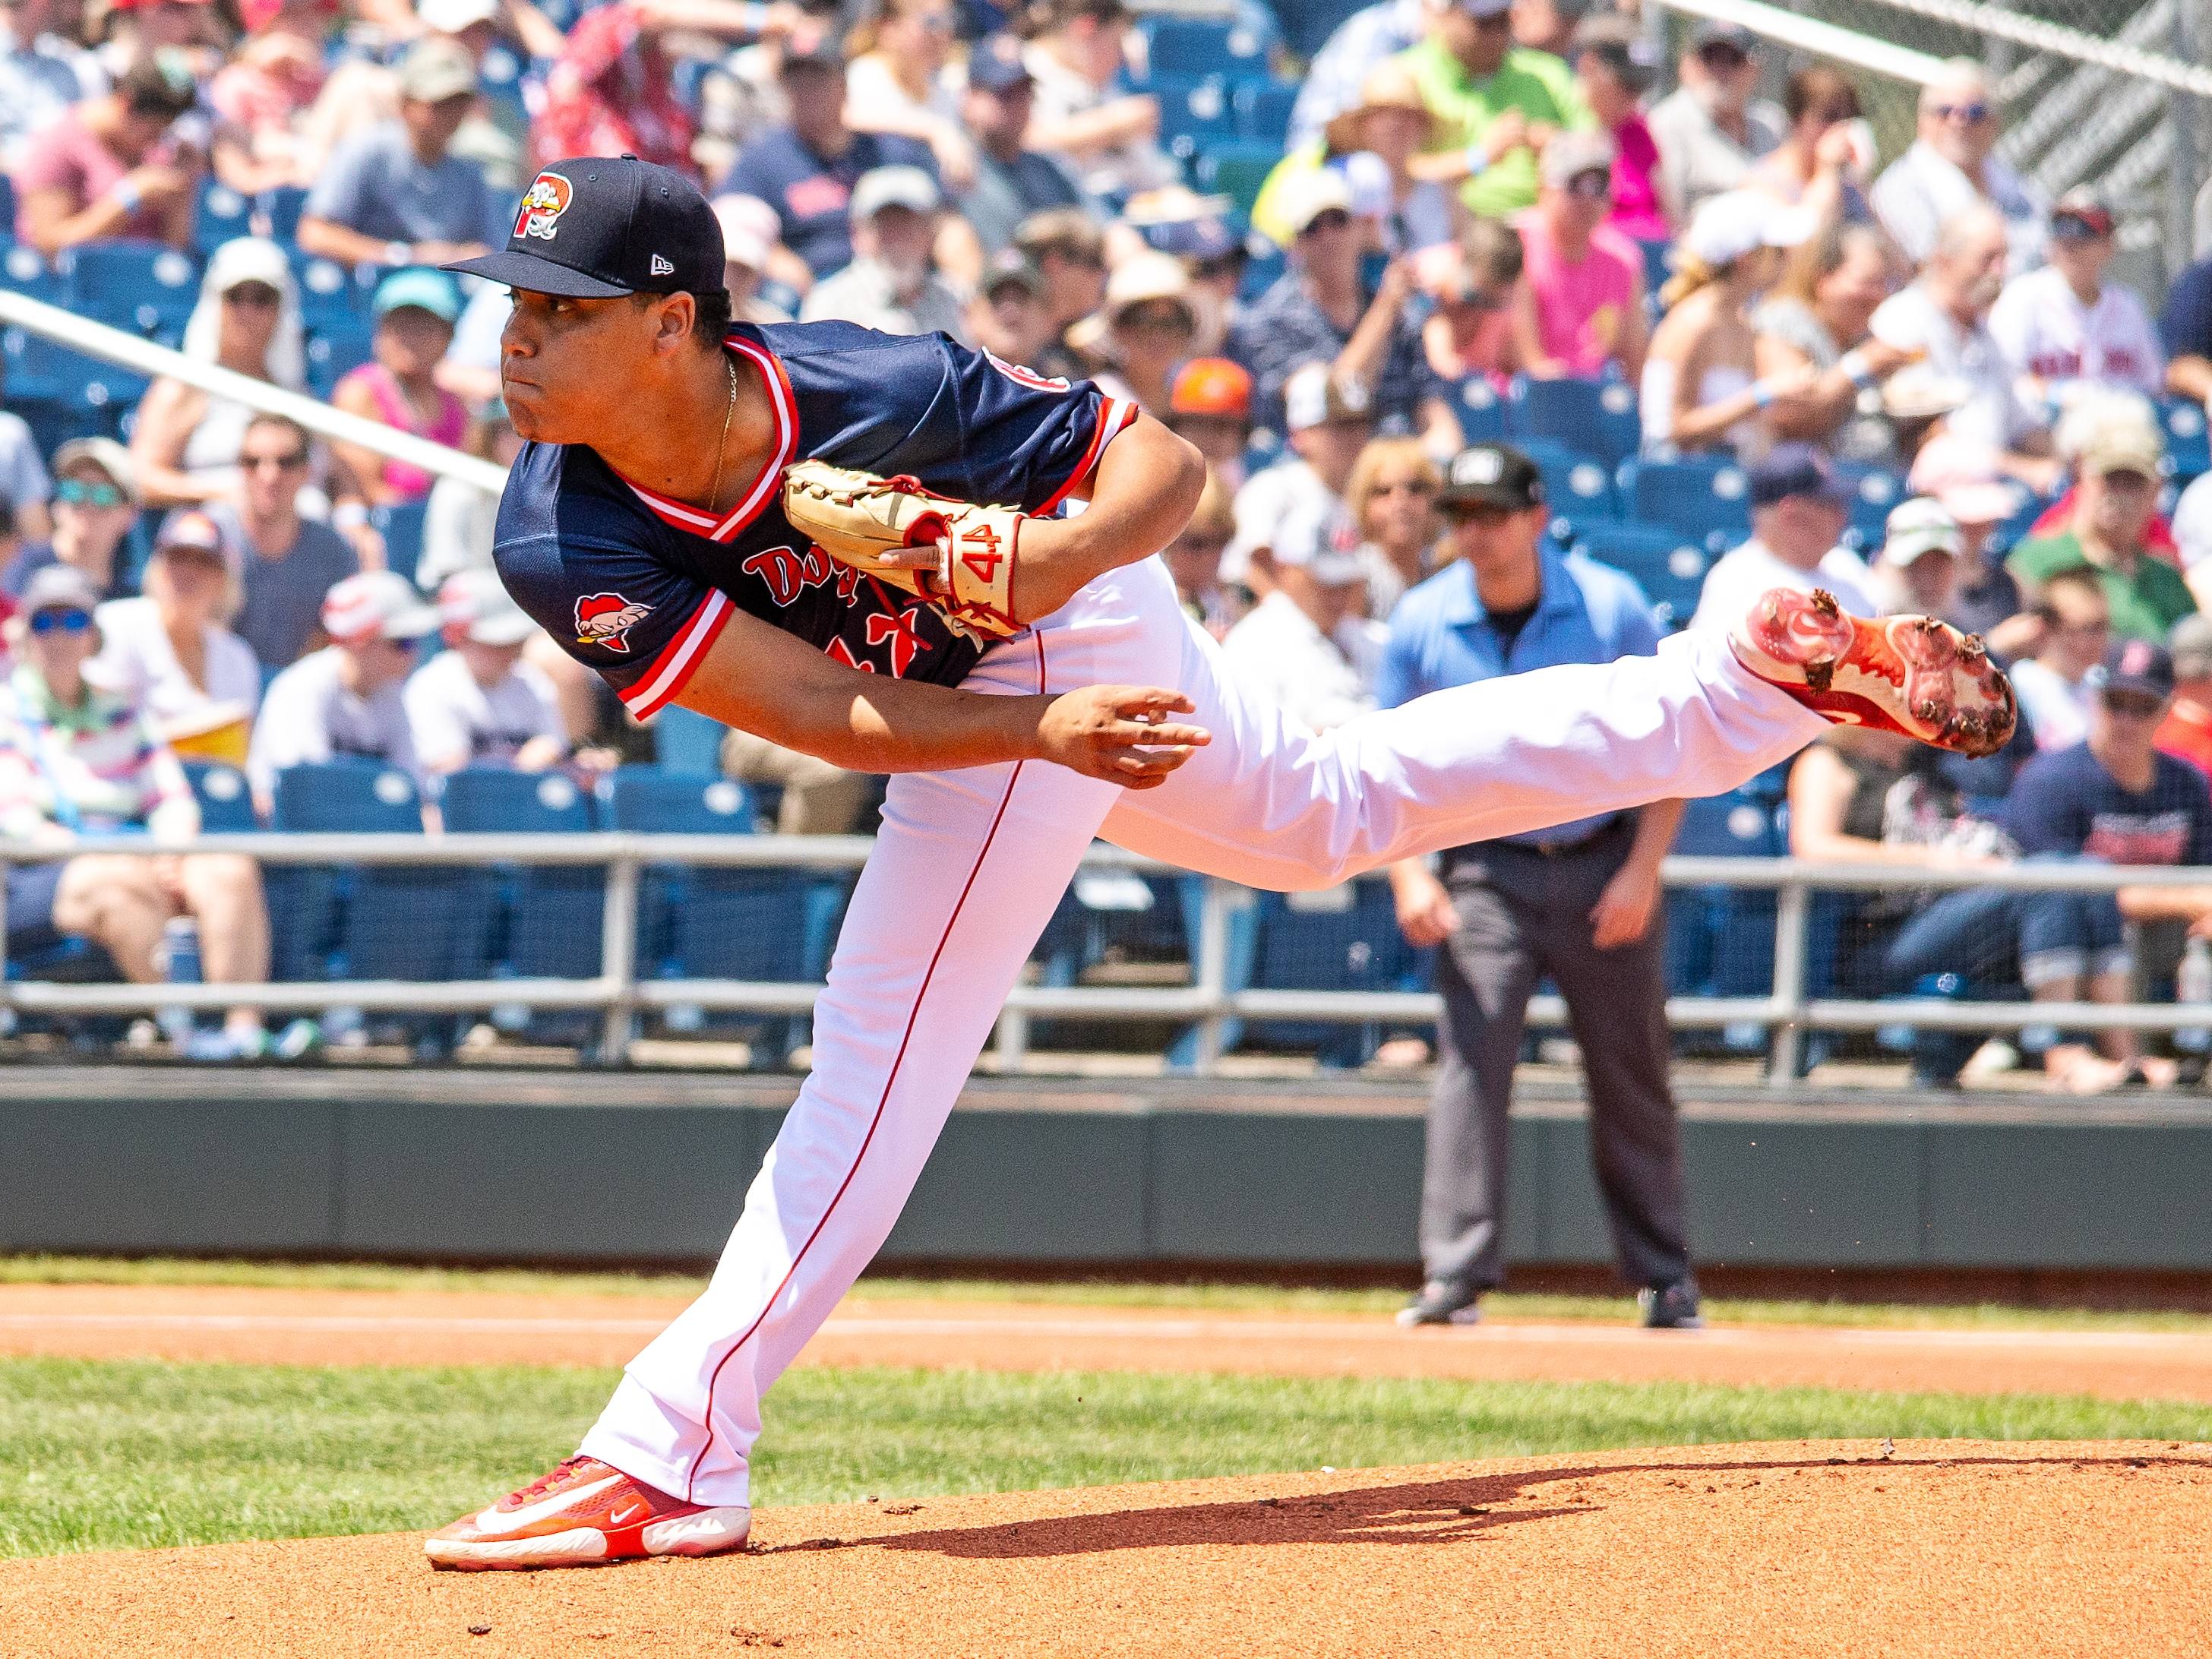 Major League Baseball pitcher Pedro Martinez promotes the new